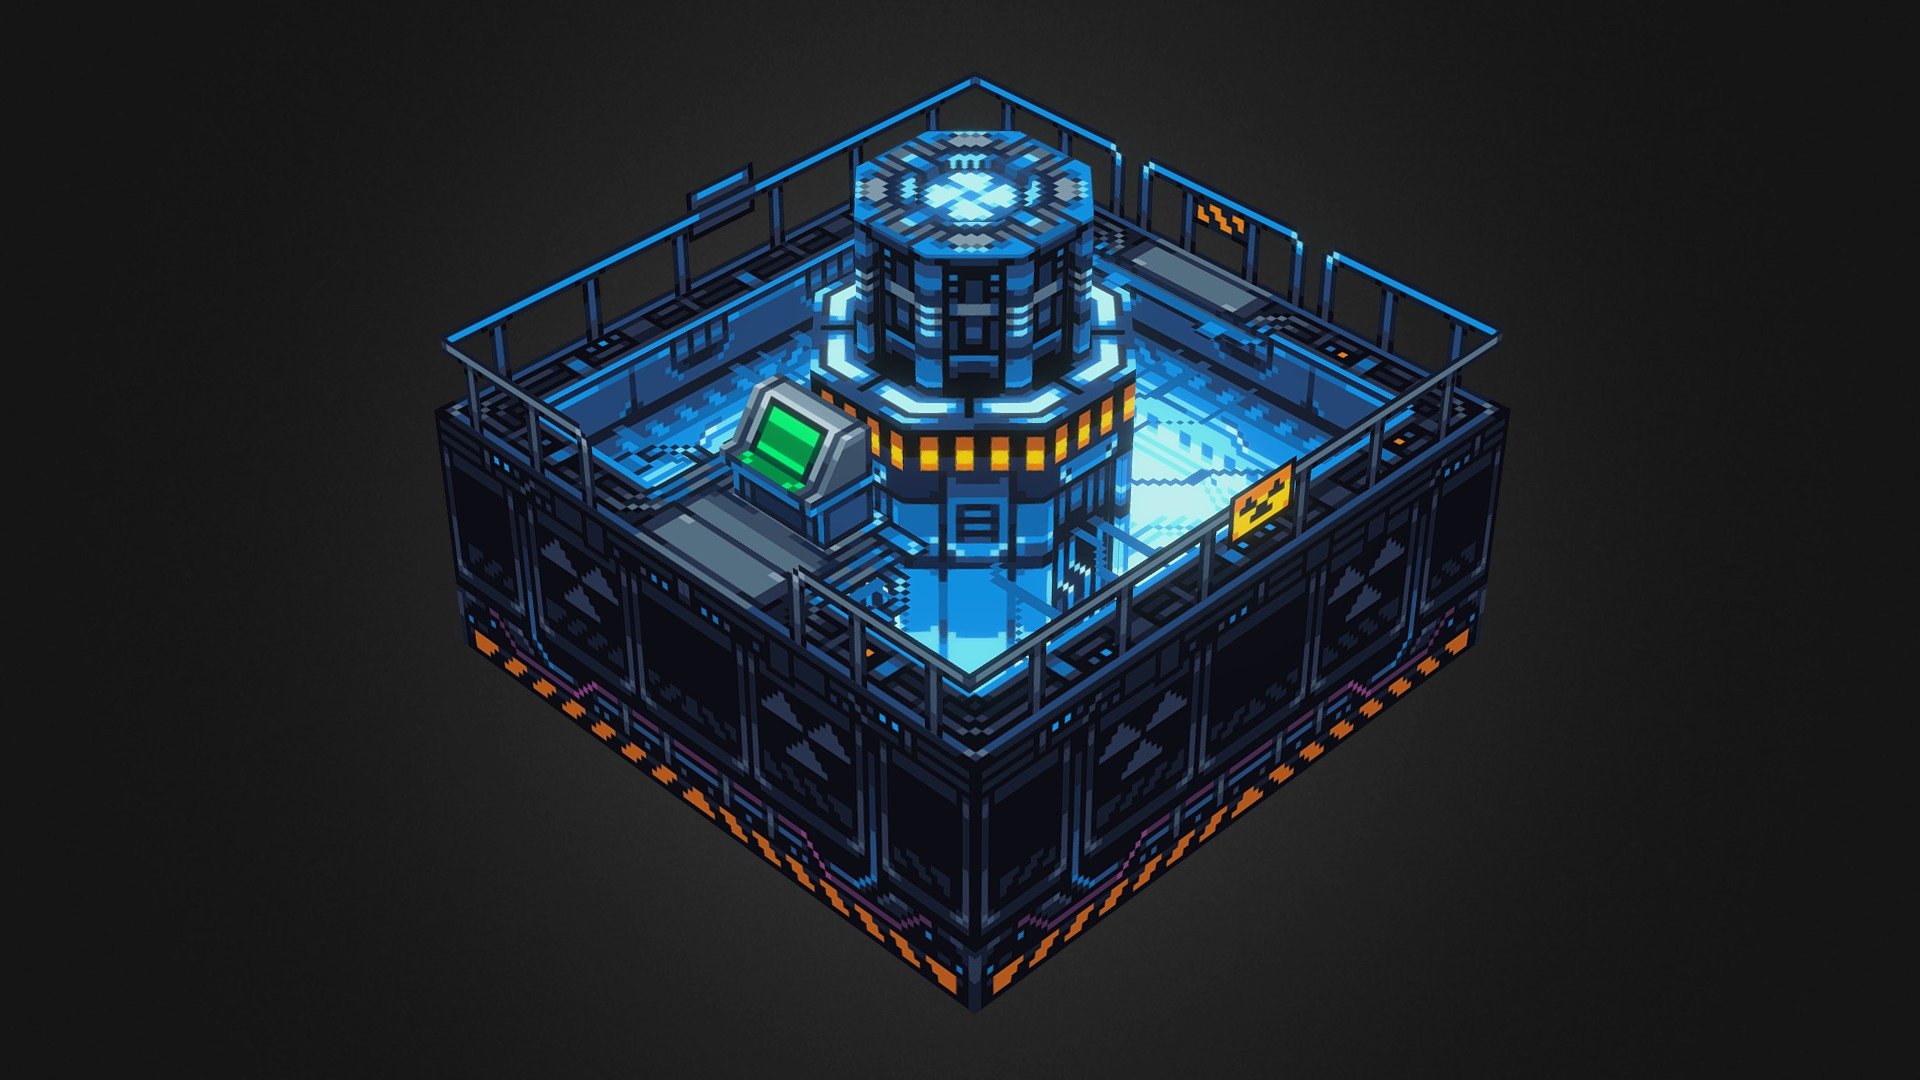 starmade reactor chambers